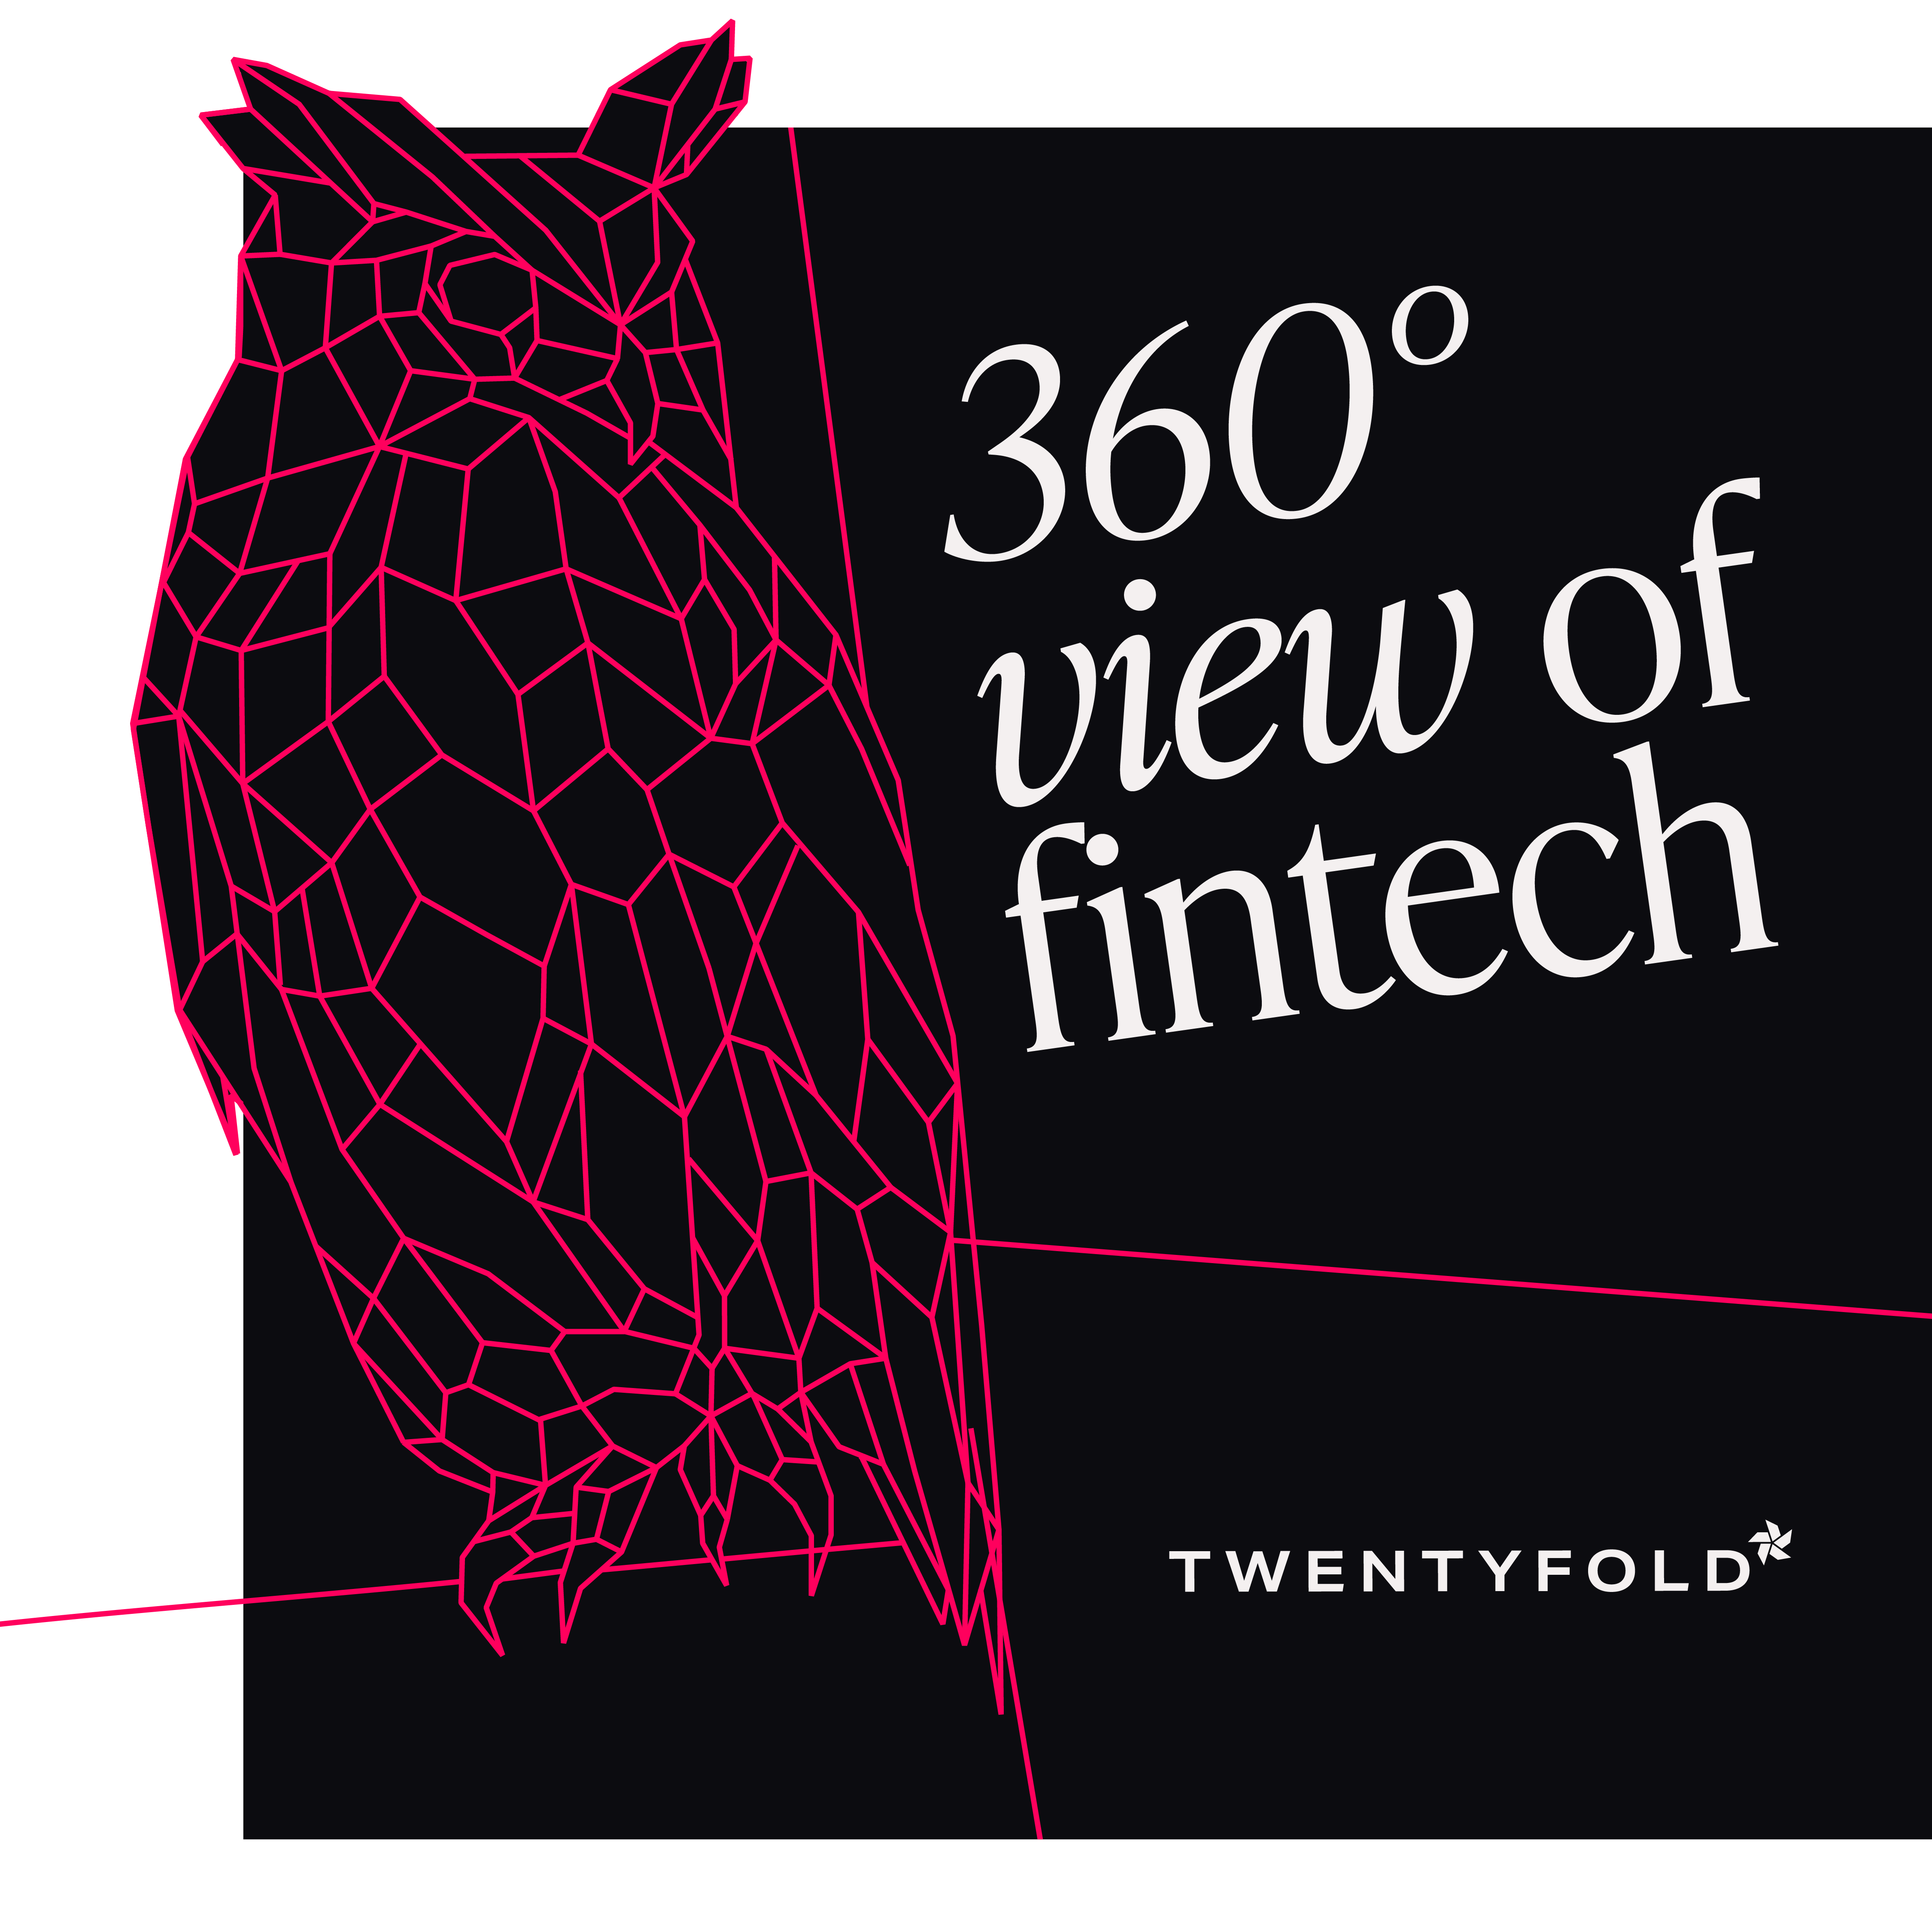 Owl - 360 degree view of fintech